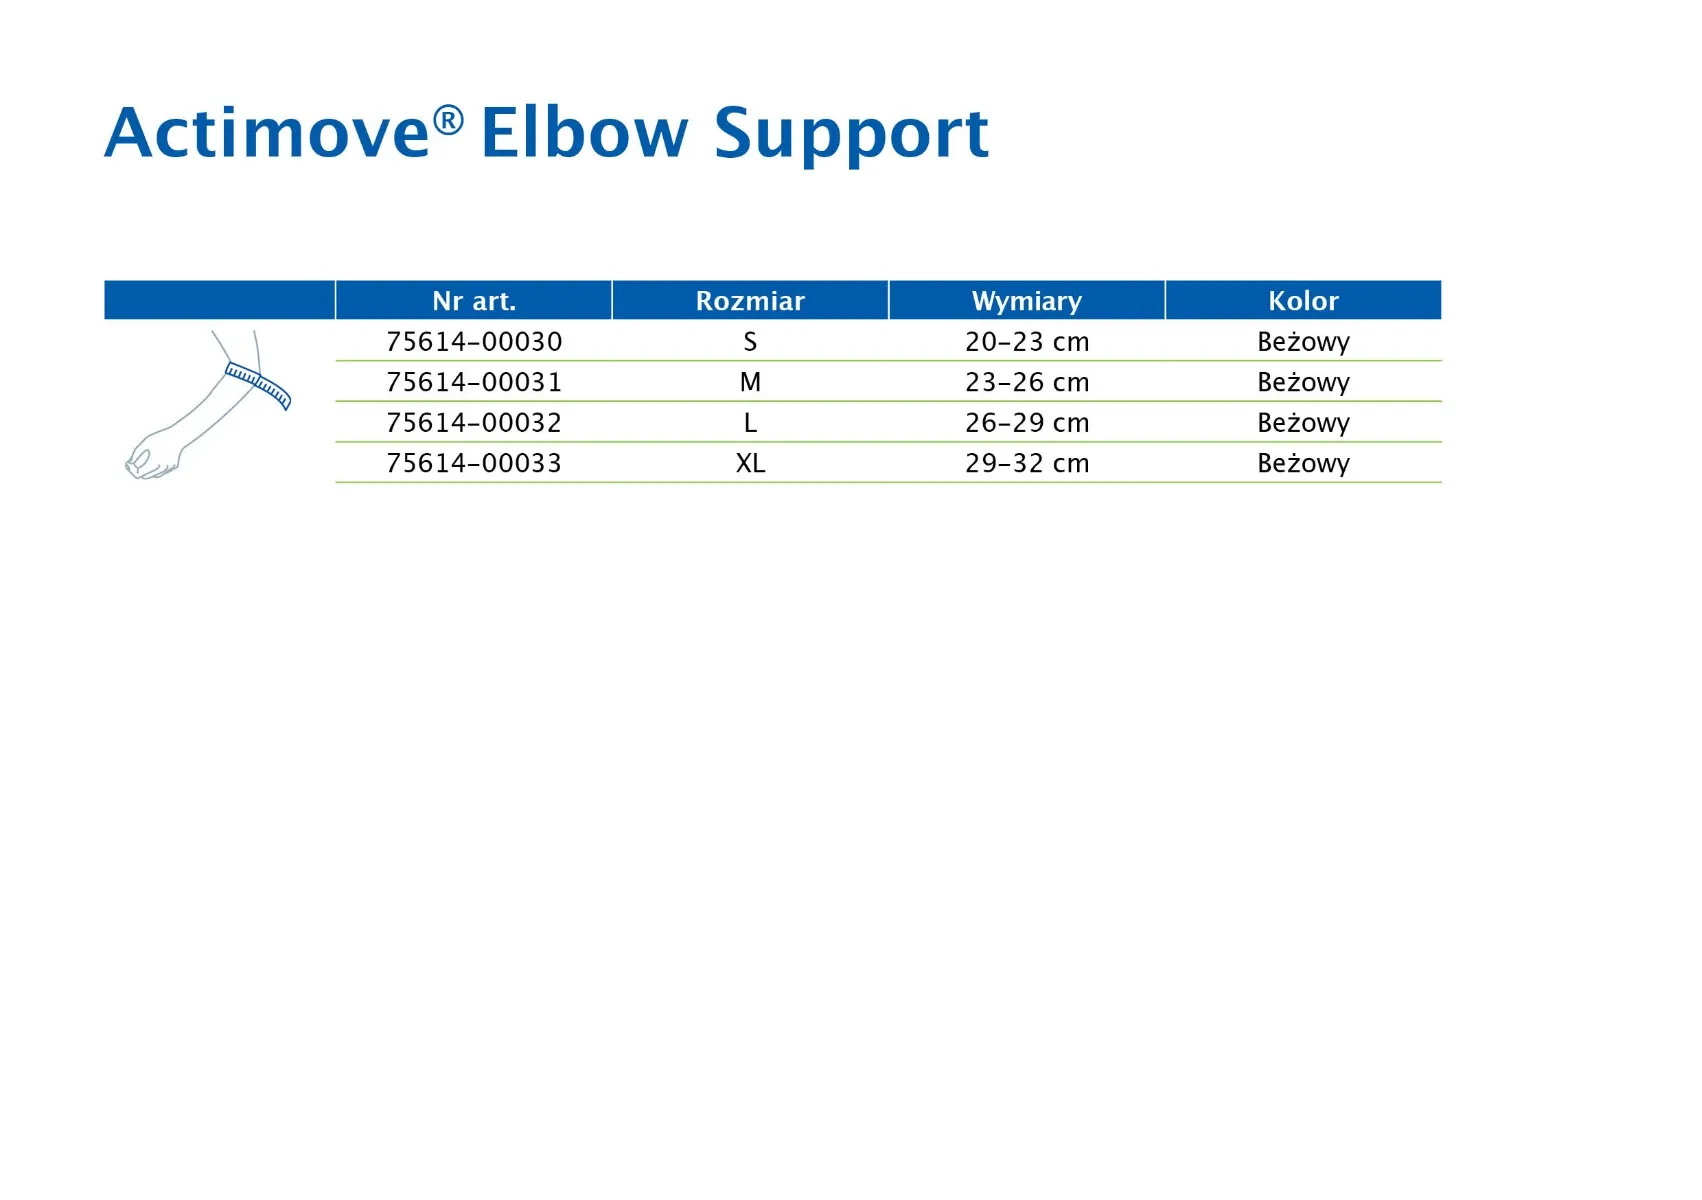 Actimove® Everyday Supports opaska na łokieć beżowa rozmiar S, 1 szt. 